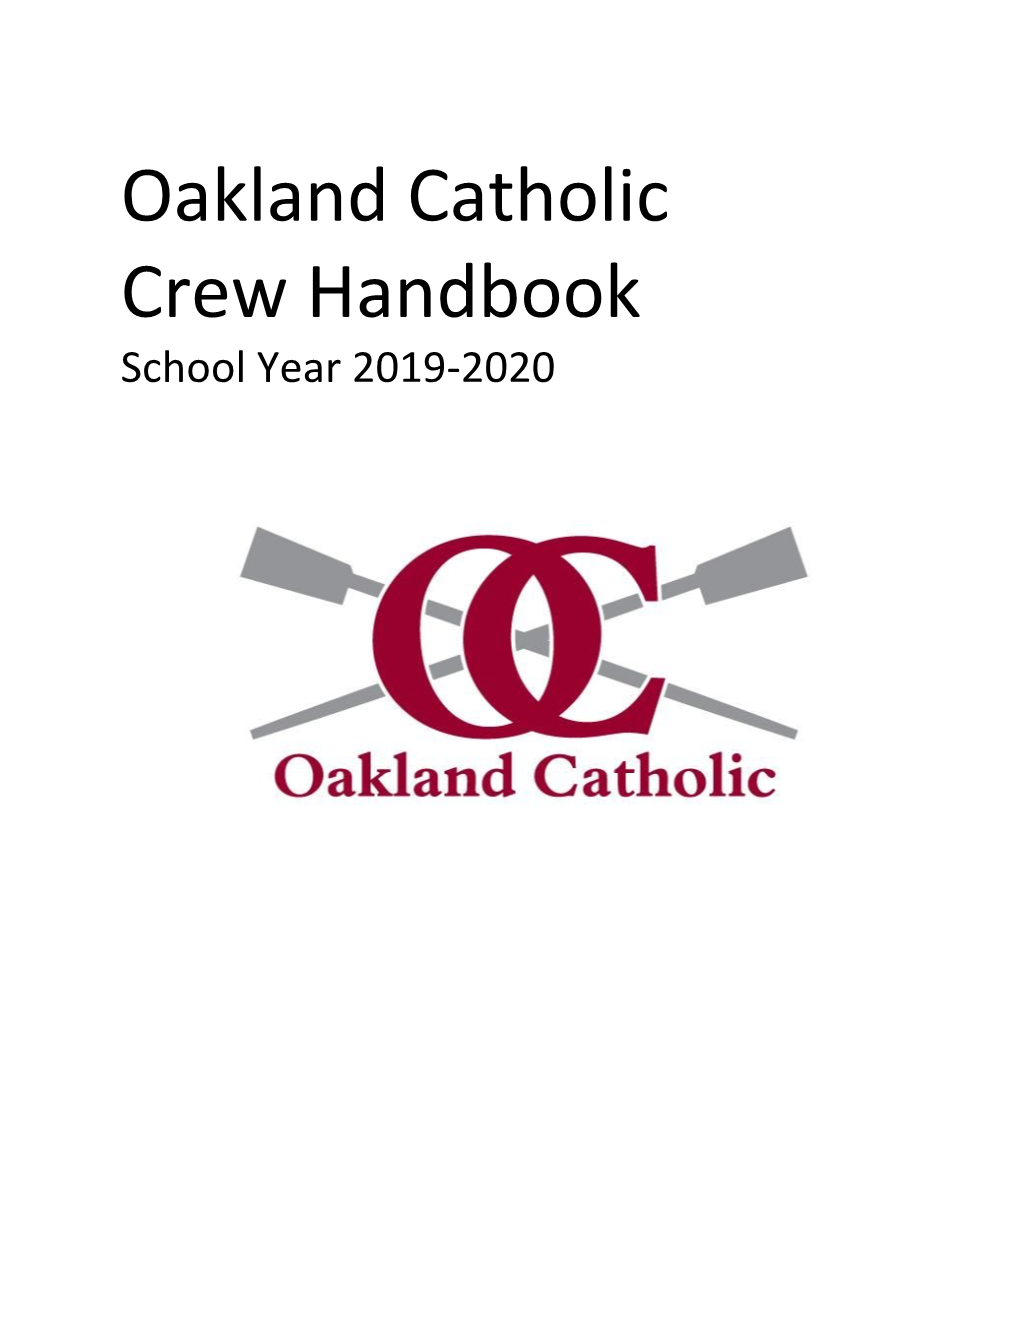 Oakland Catholic Crew Handbook School Year 2019-2020